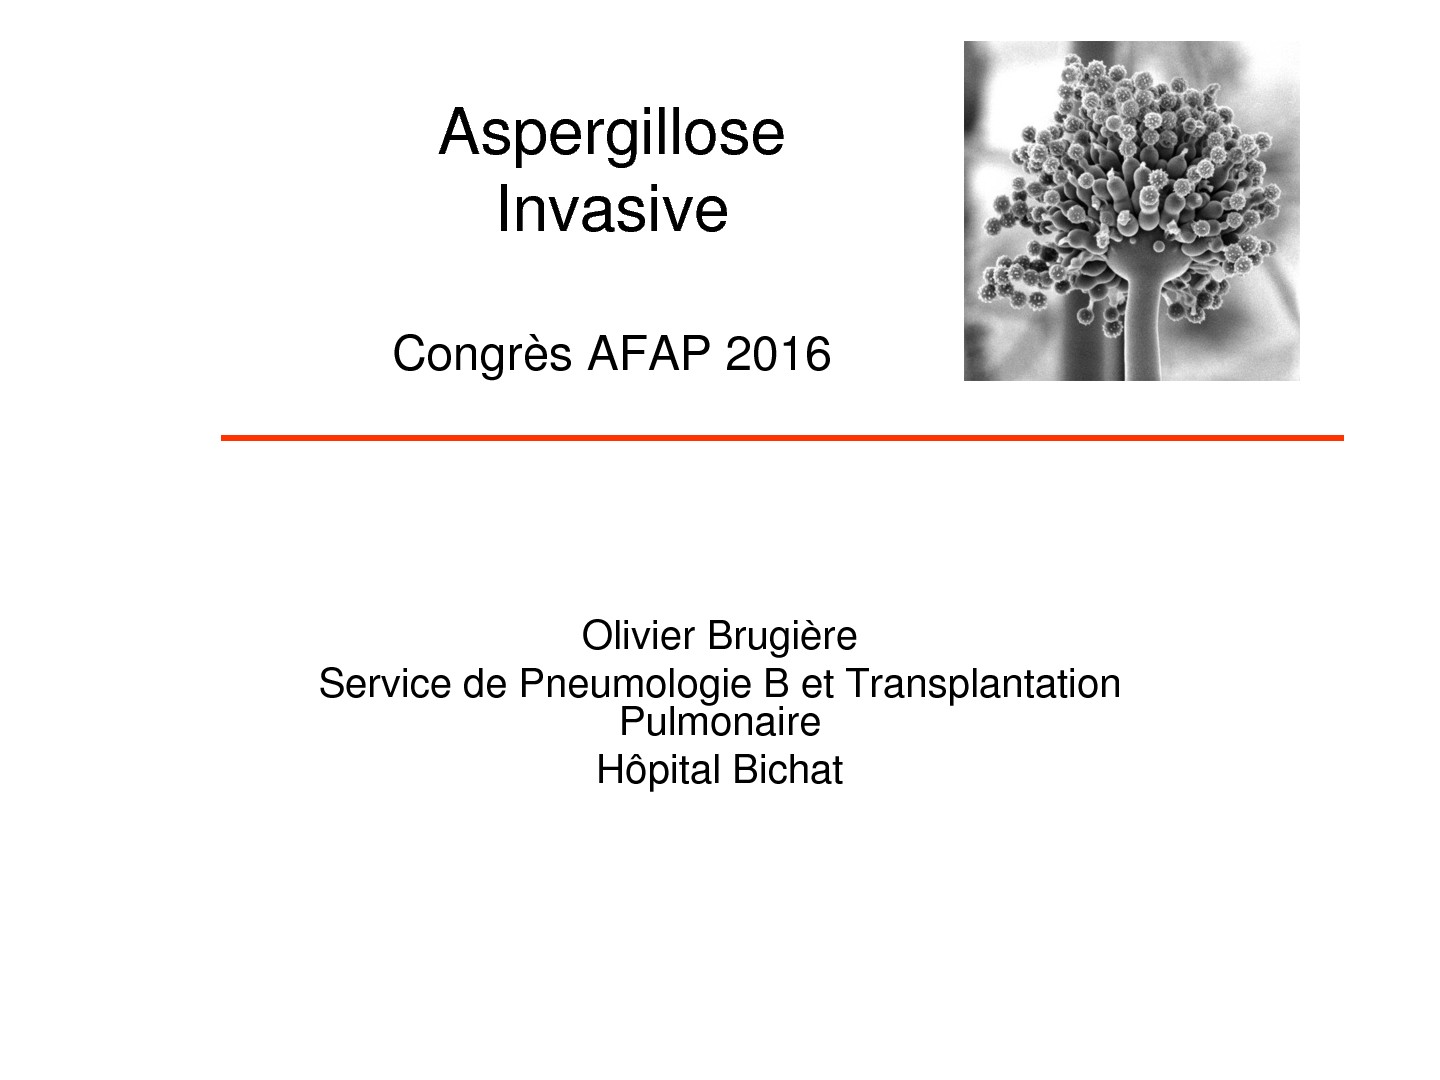 Aspergillose invasive. Olivier Brugière